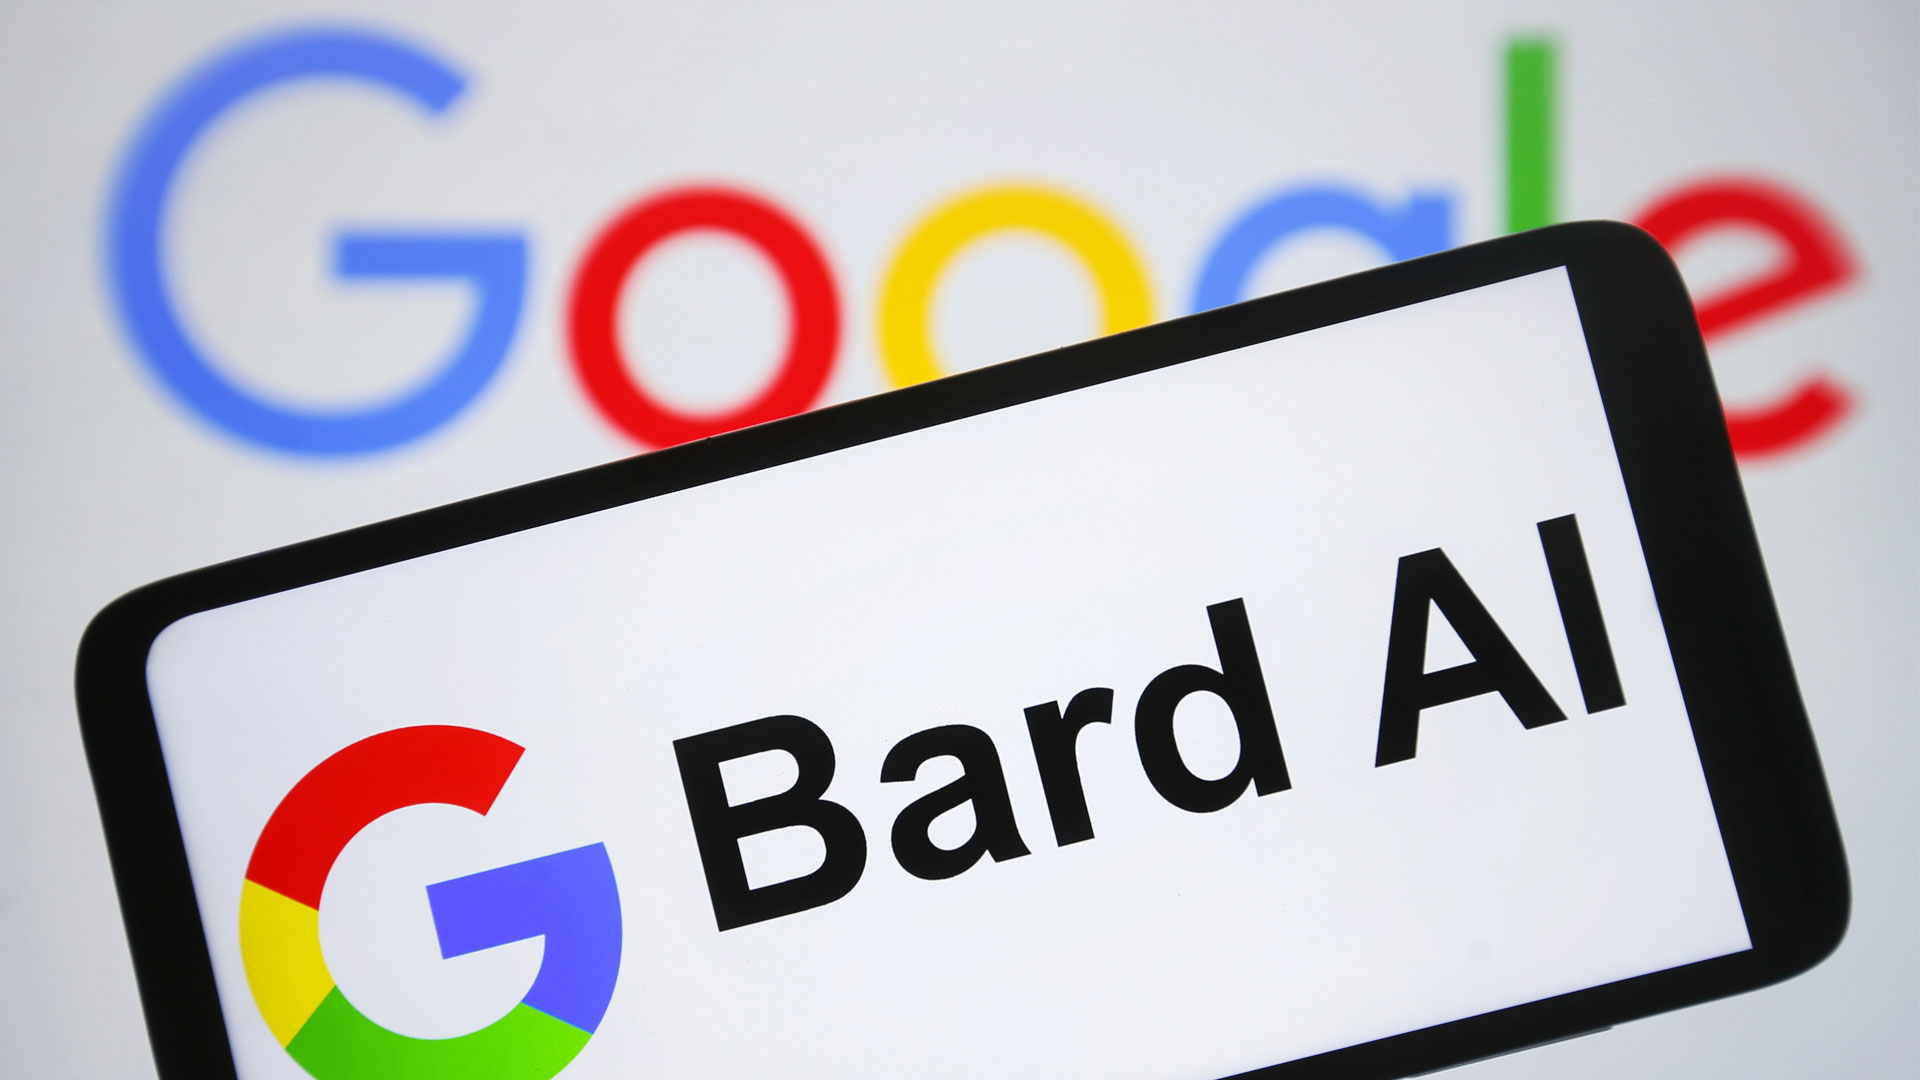 Google BARD: Enhancing Creativity and Writing with AI